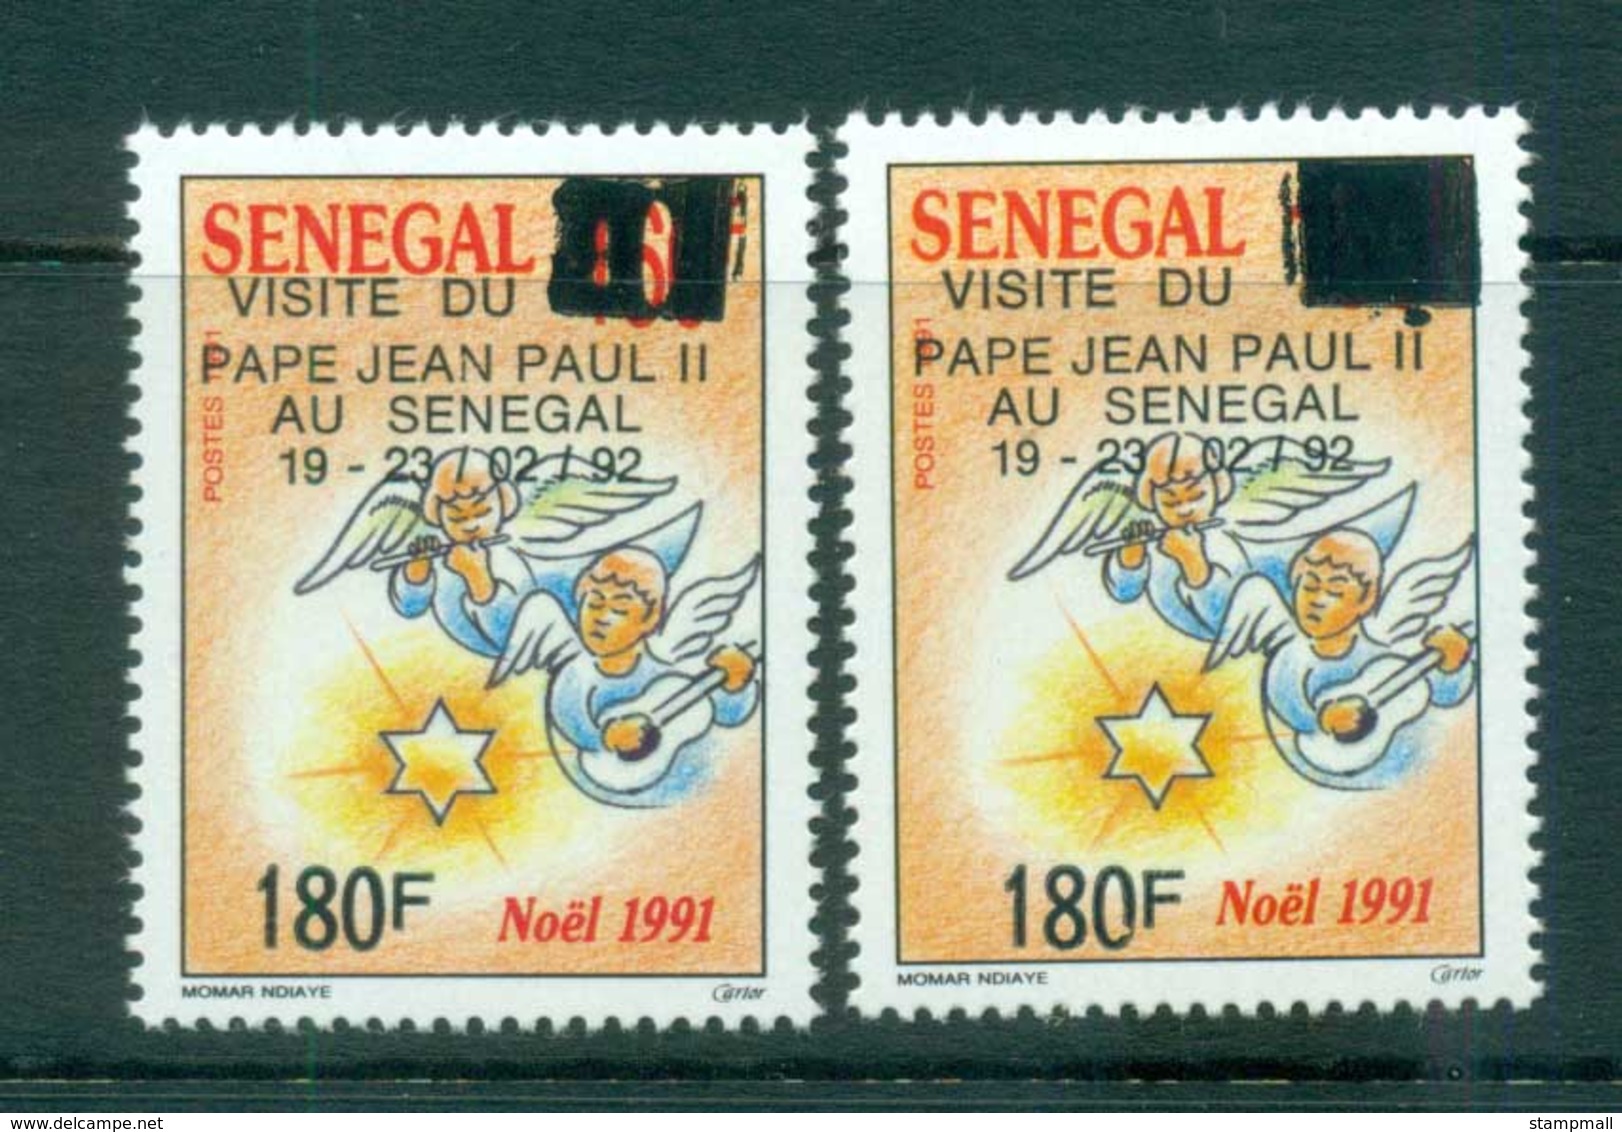 Senegal 1992 Popes Visit, Opt Vars MLH Lot73579 - Senegal (1960-...)